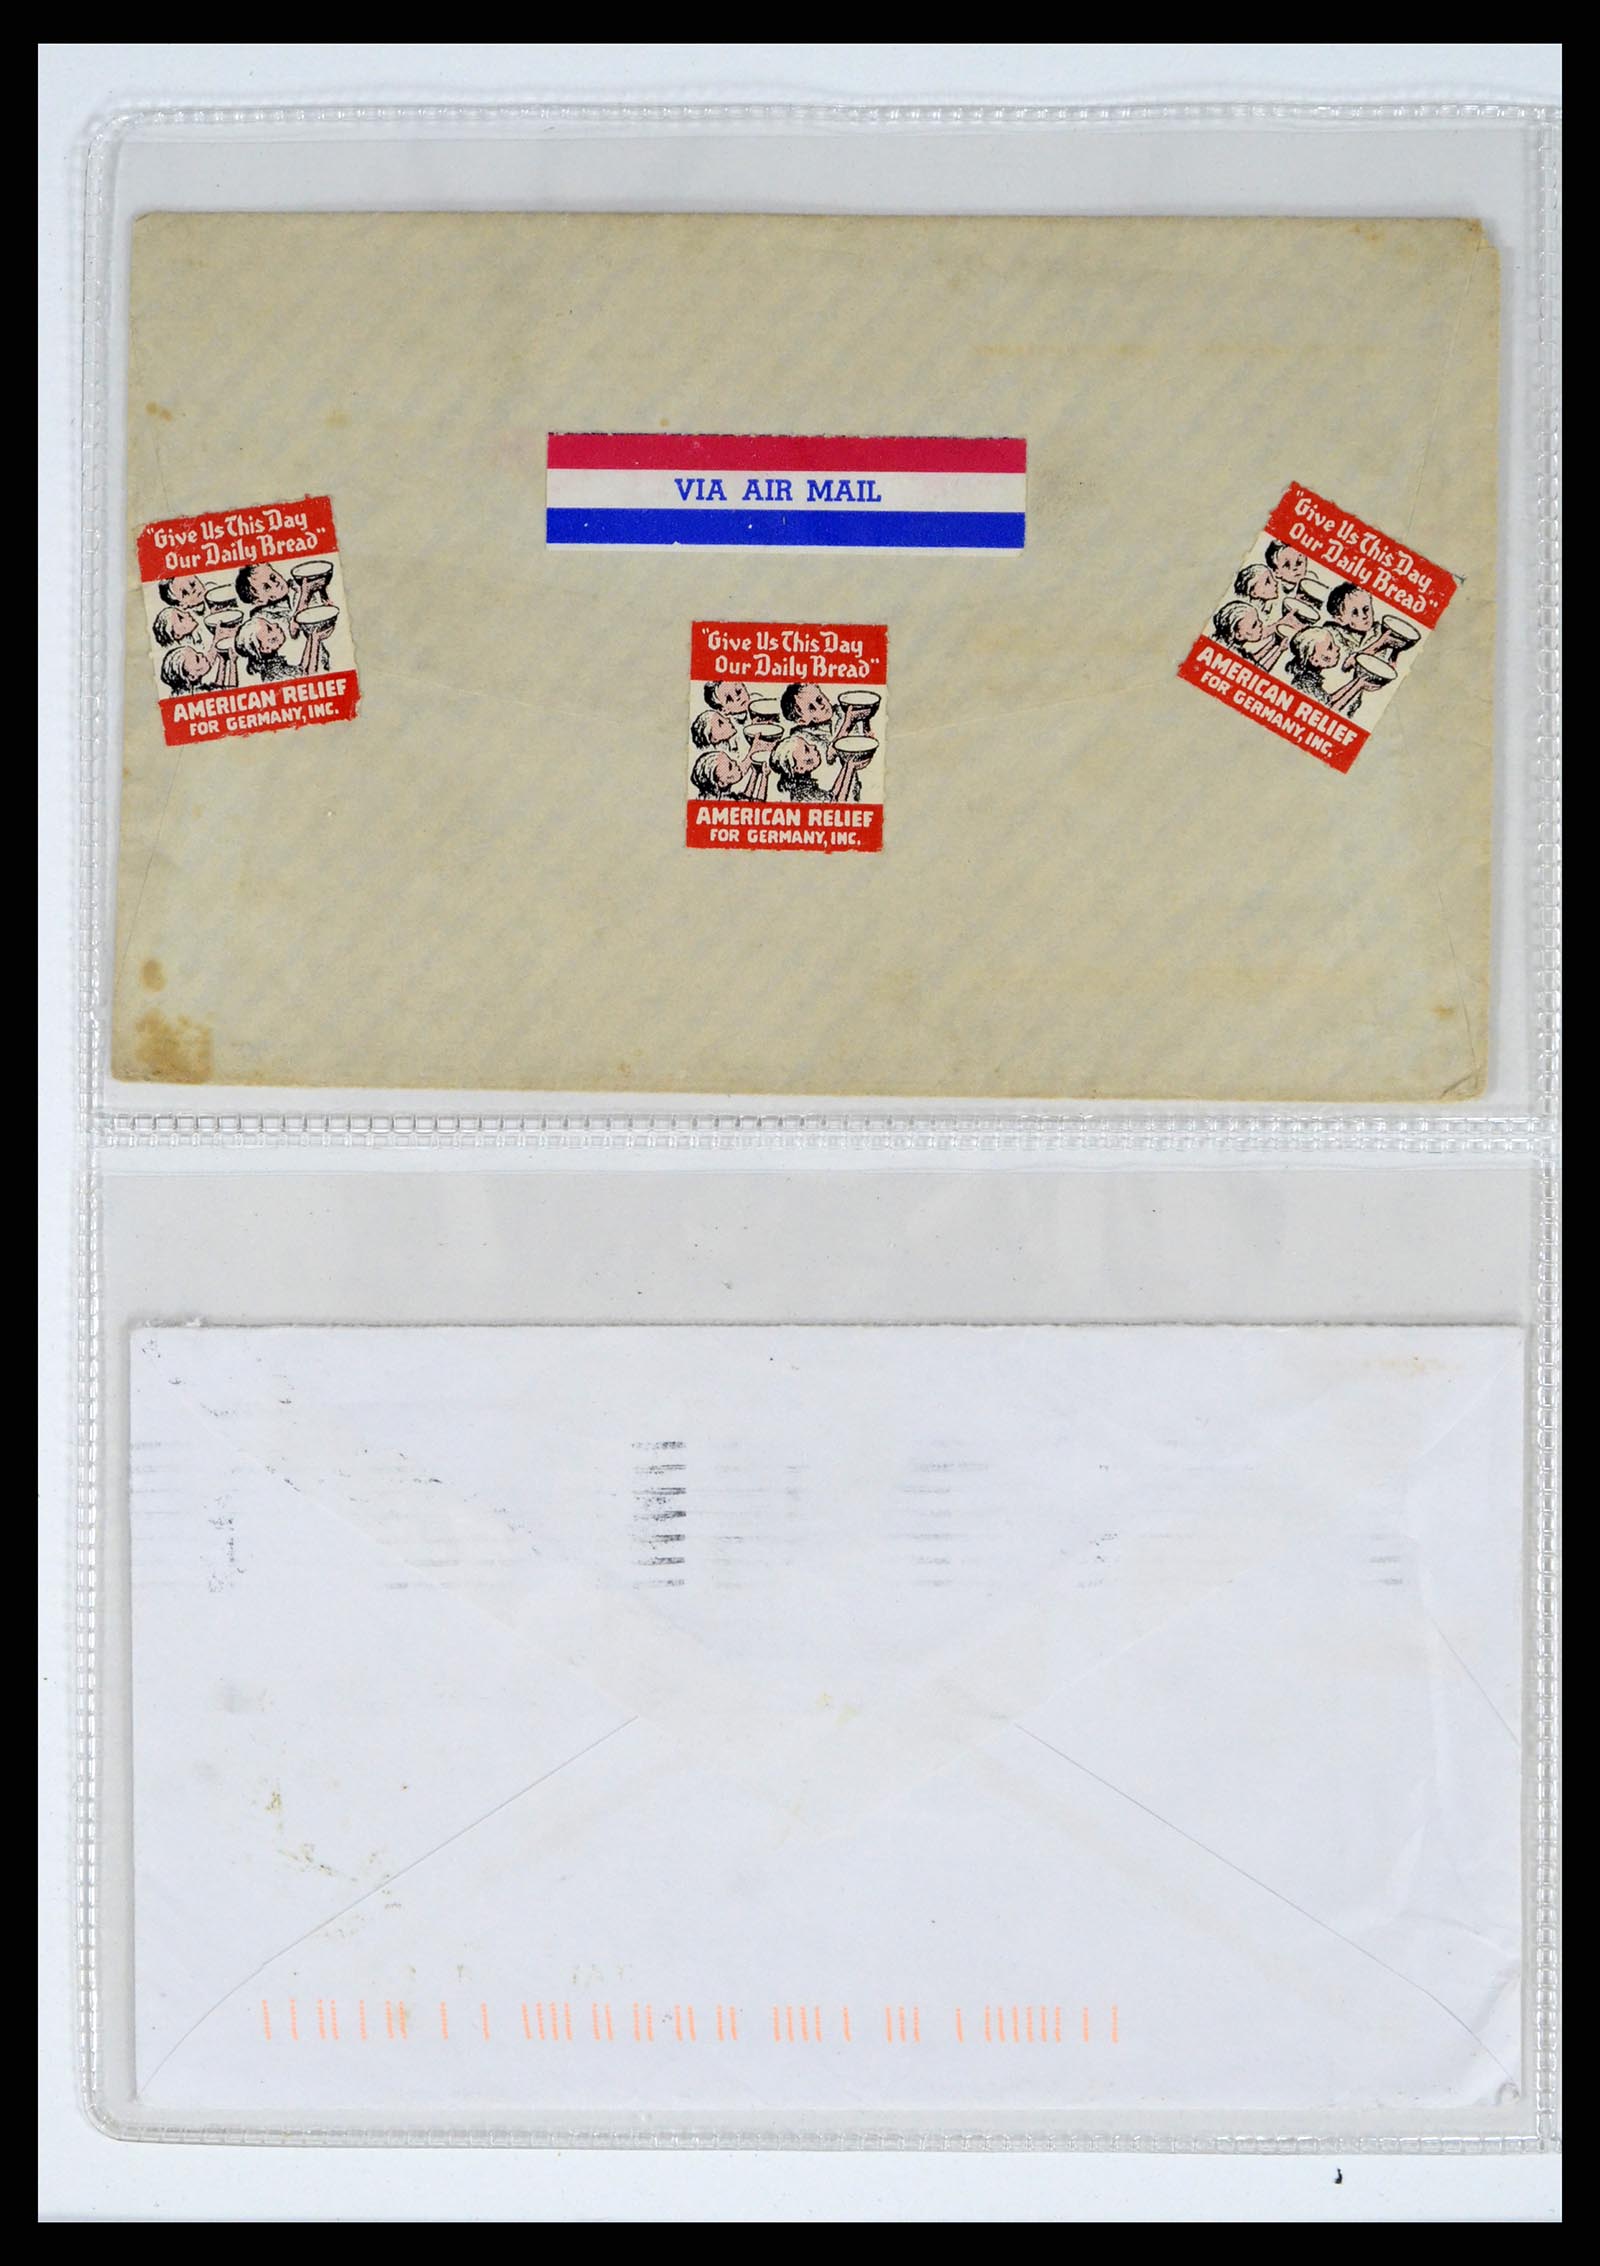 37668 215 - Stamp collection 37668 USA Christmas seals on cover 1908-2009.